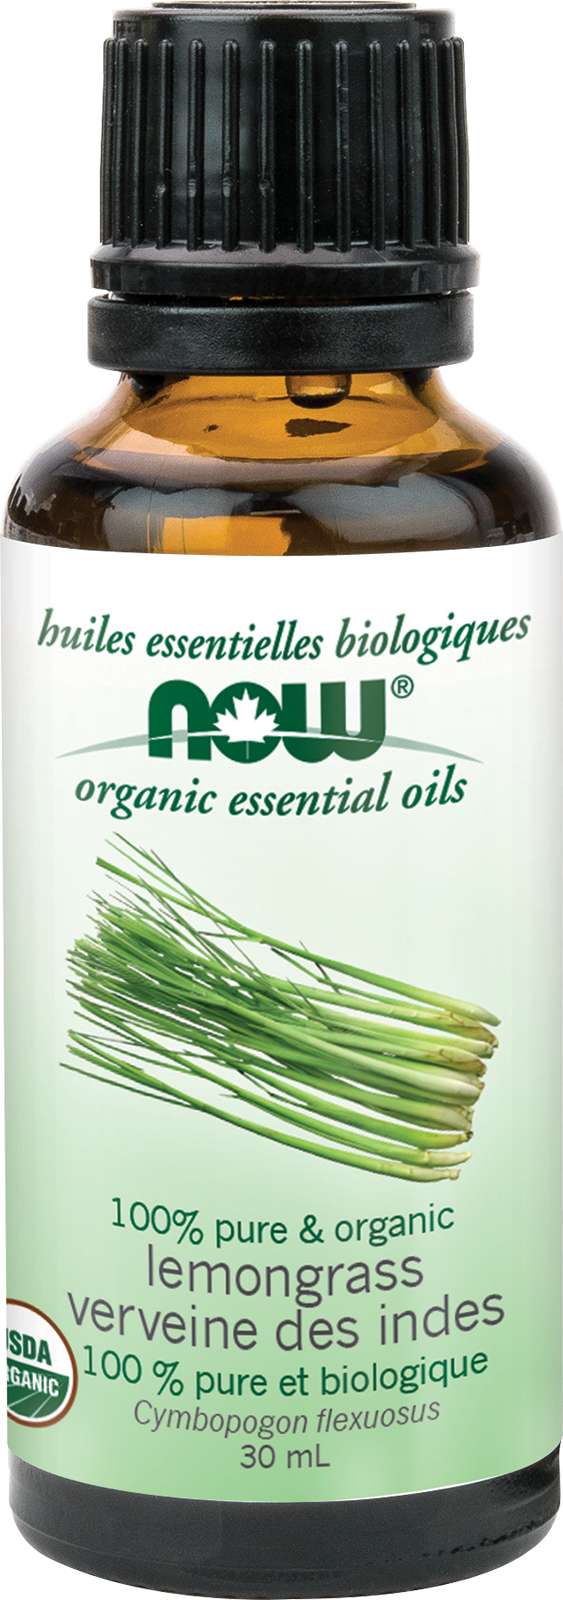 Organic Lemongrass Oil (Cymbopogon flexuosus)30mL